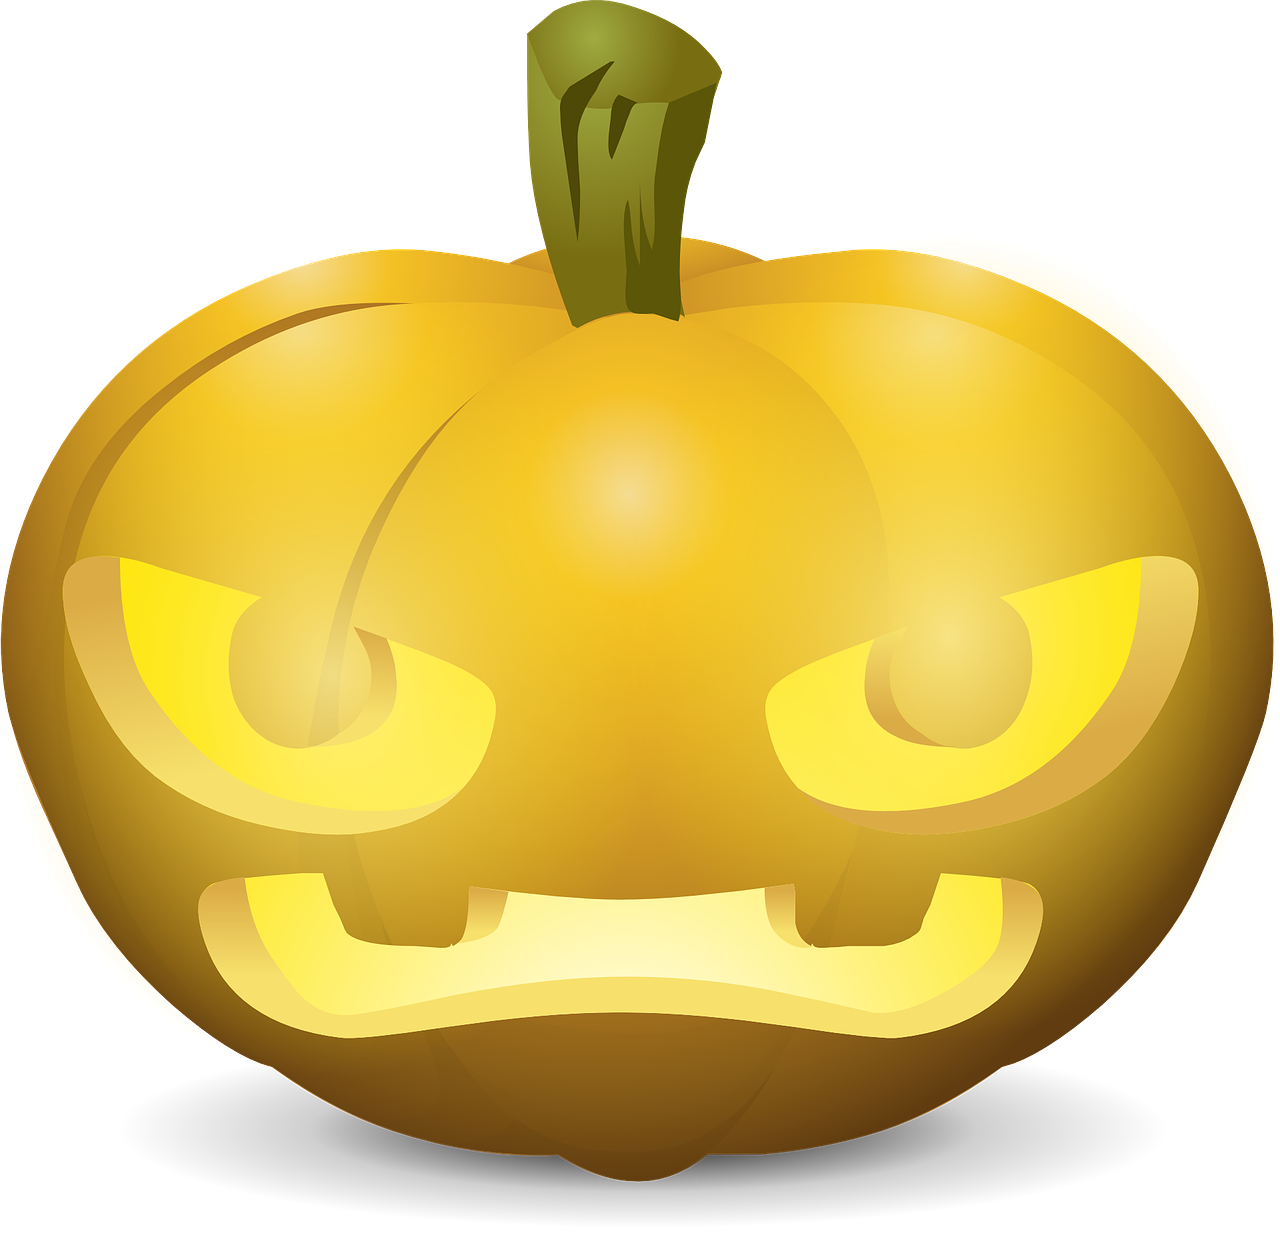 a halloween pumpkin with an angry face, a digital rendering, sōsaku hanga, golden, gloomcore illustration, it has lemon skin texture, hard lighting!